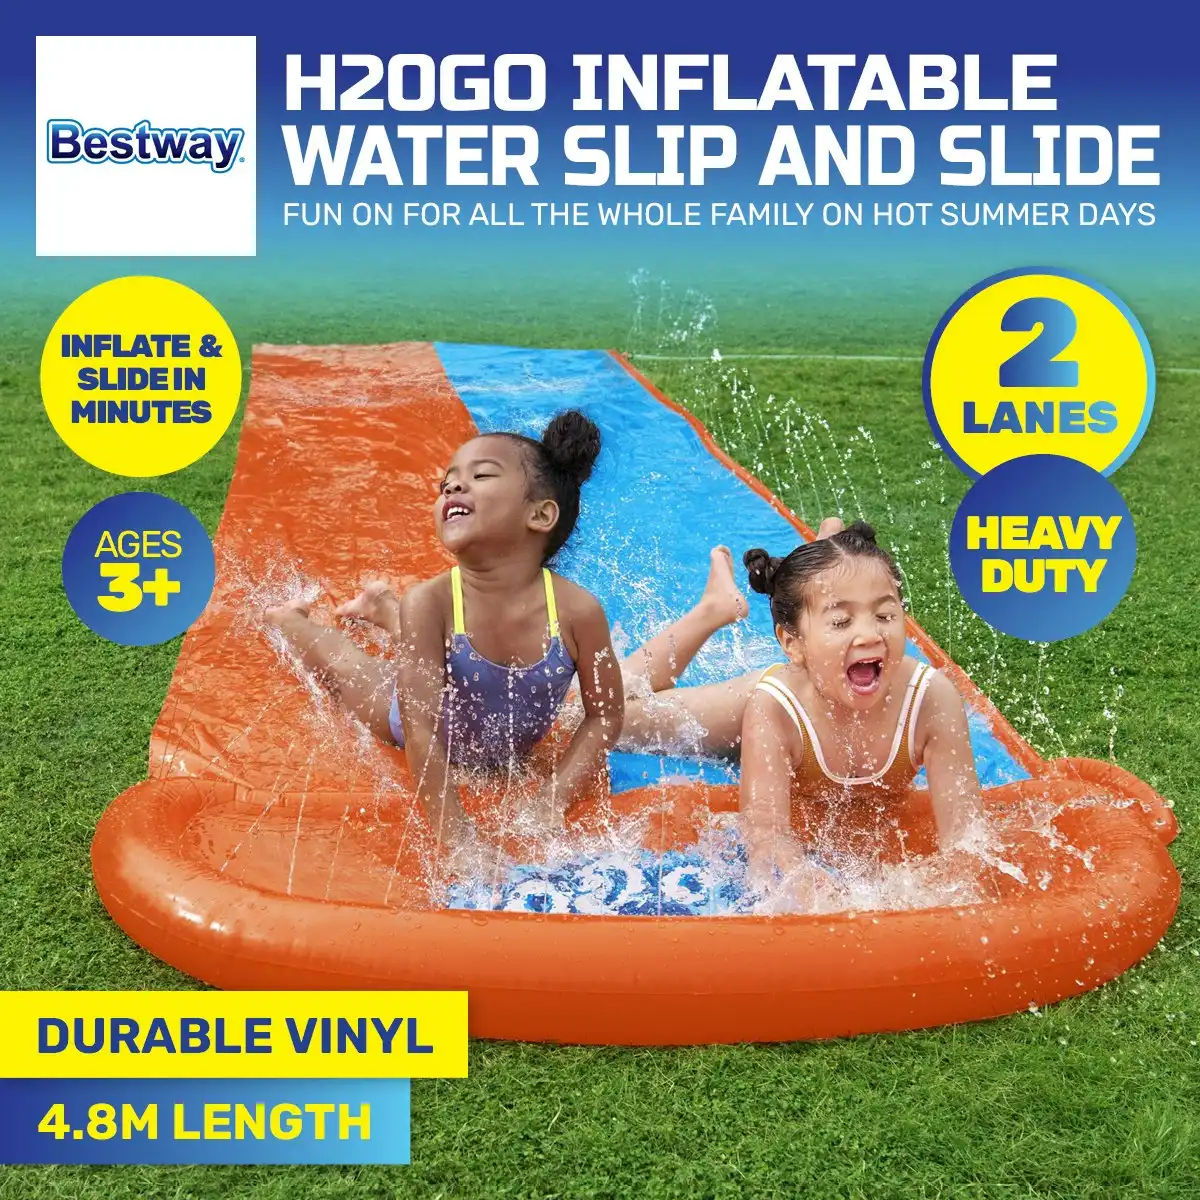 Bestway 4.8m Double Lane Inflatable Water Slide Built-In Water Jets